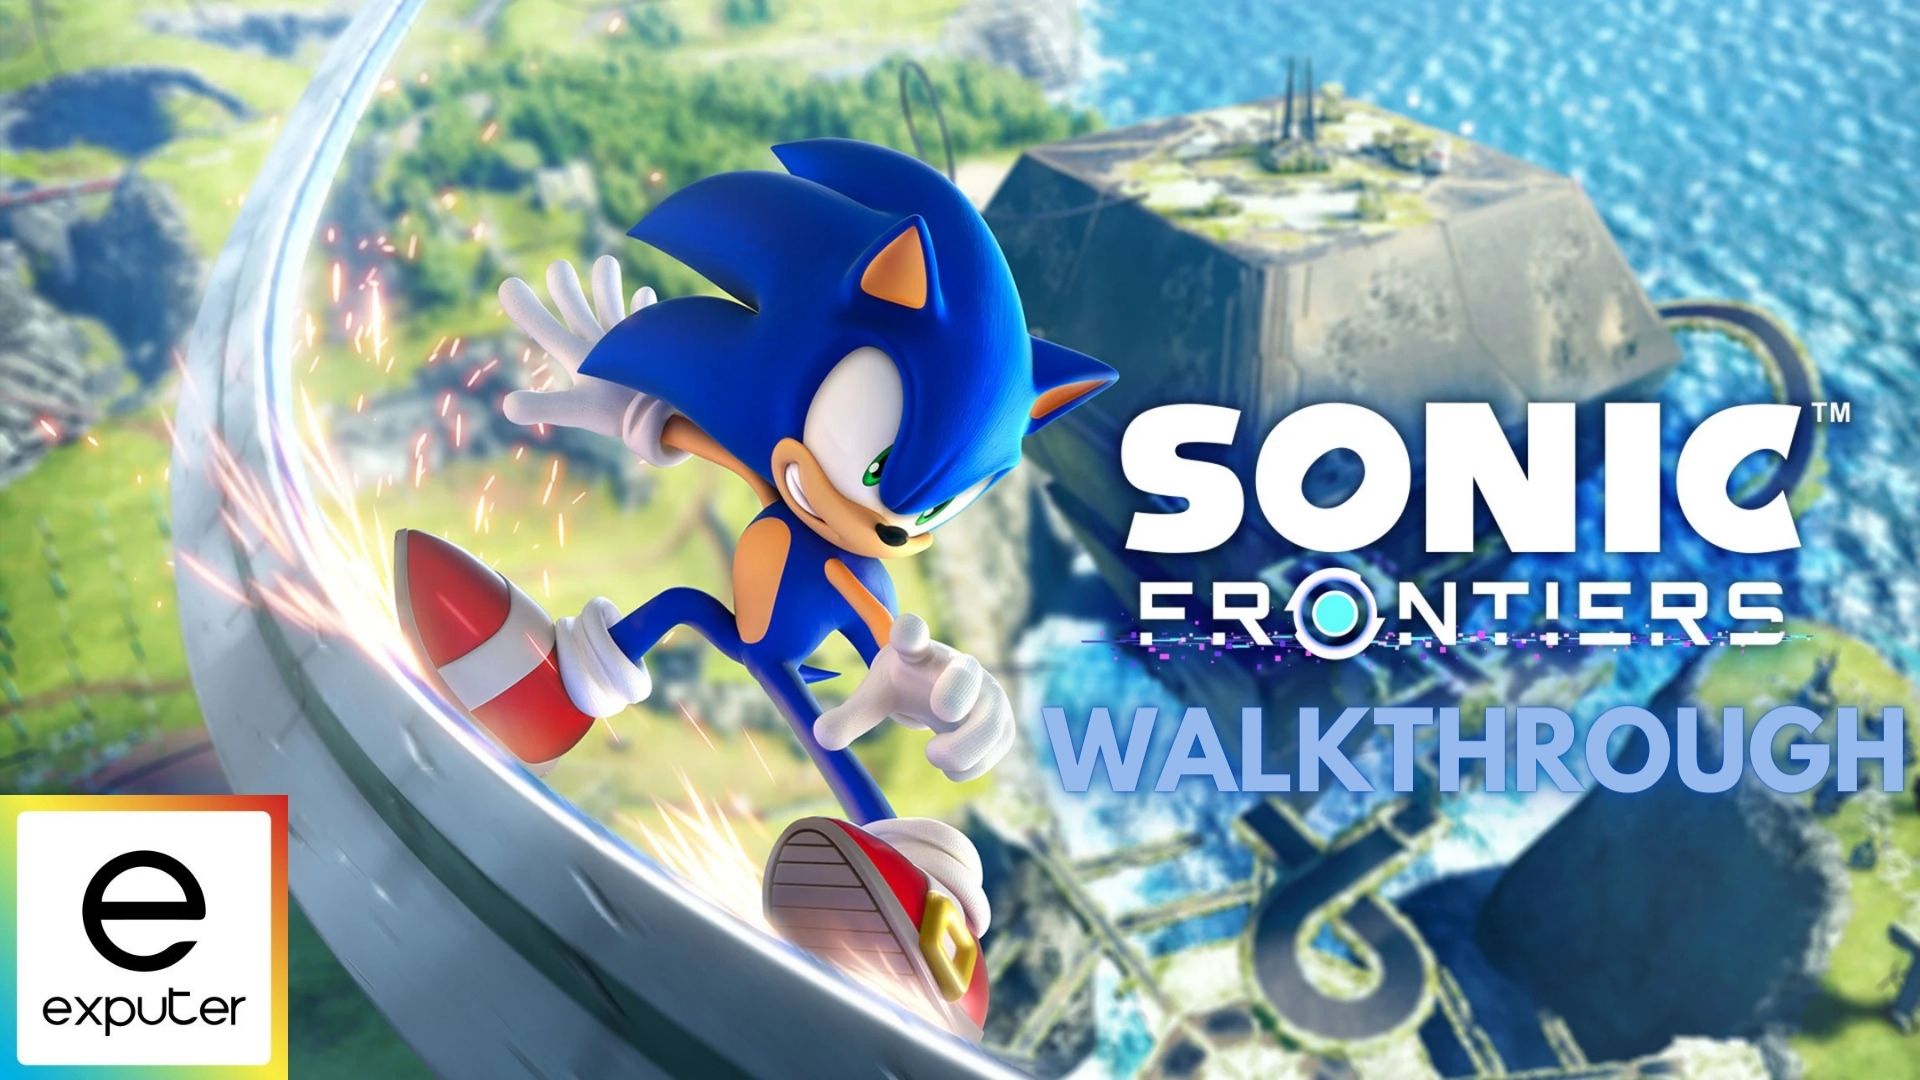 Walkthrough For Sonic Frontiers